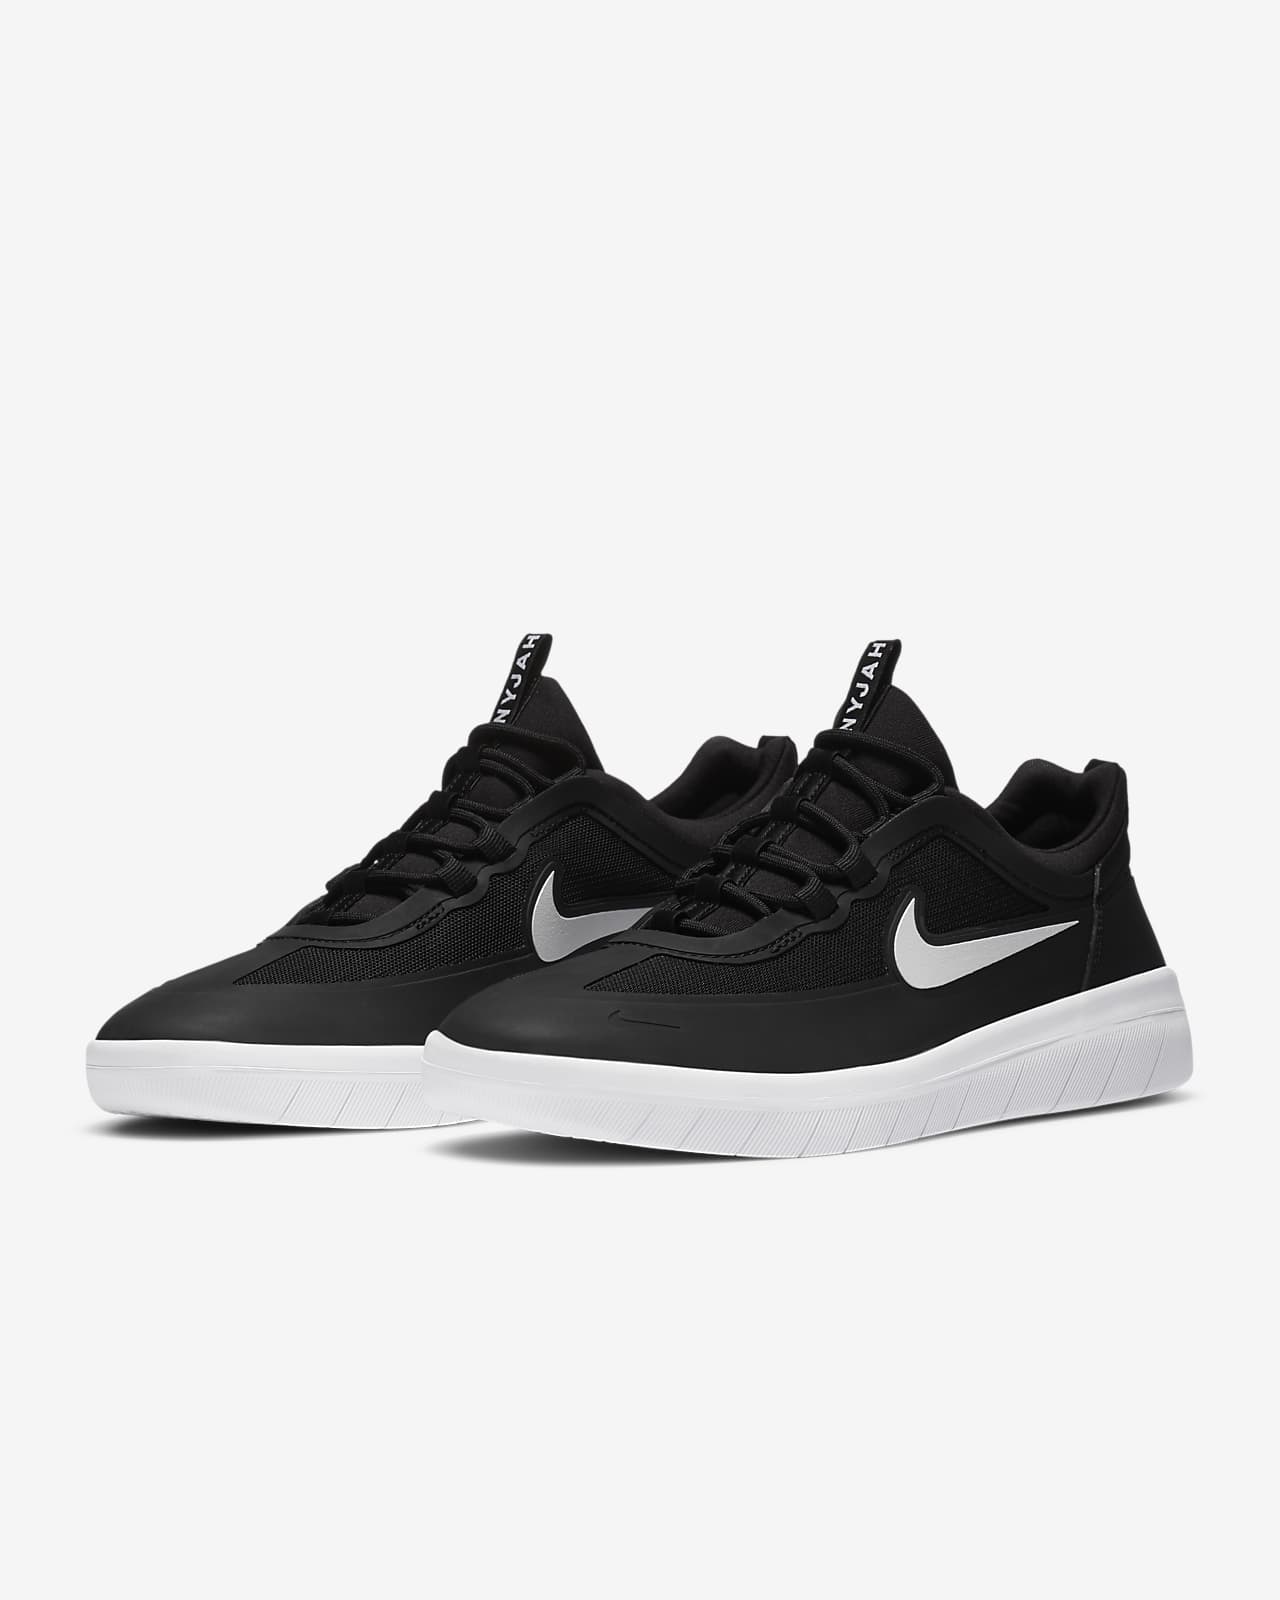 Nike SB Nyjah Free 2 Skate Shoes